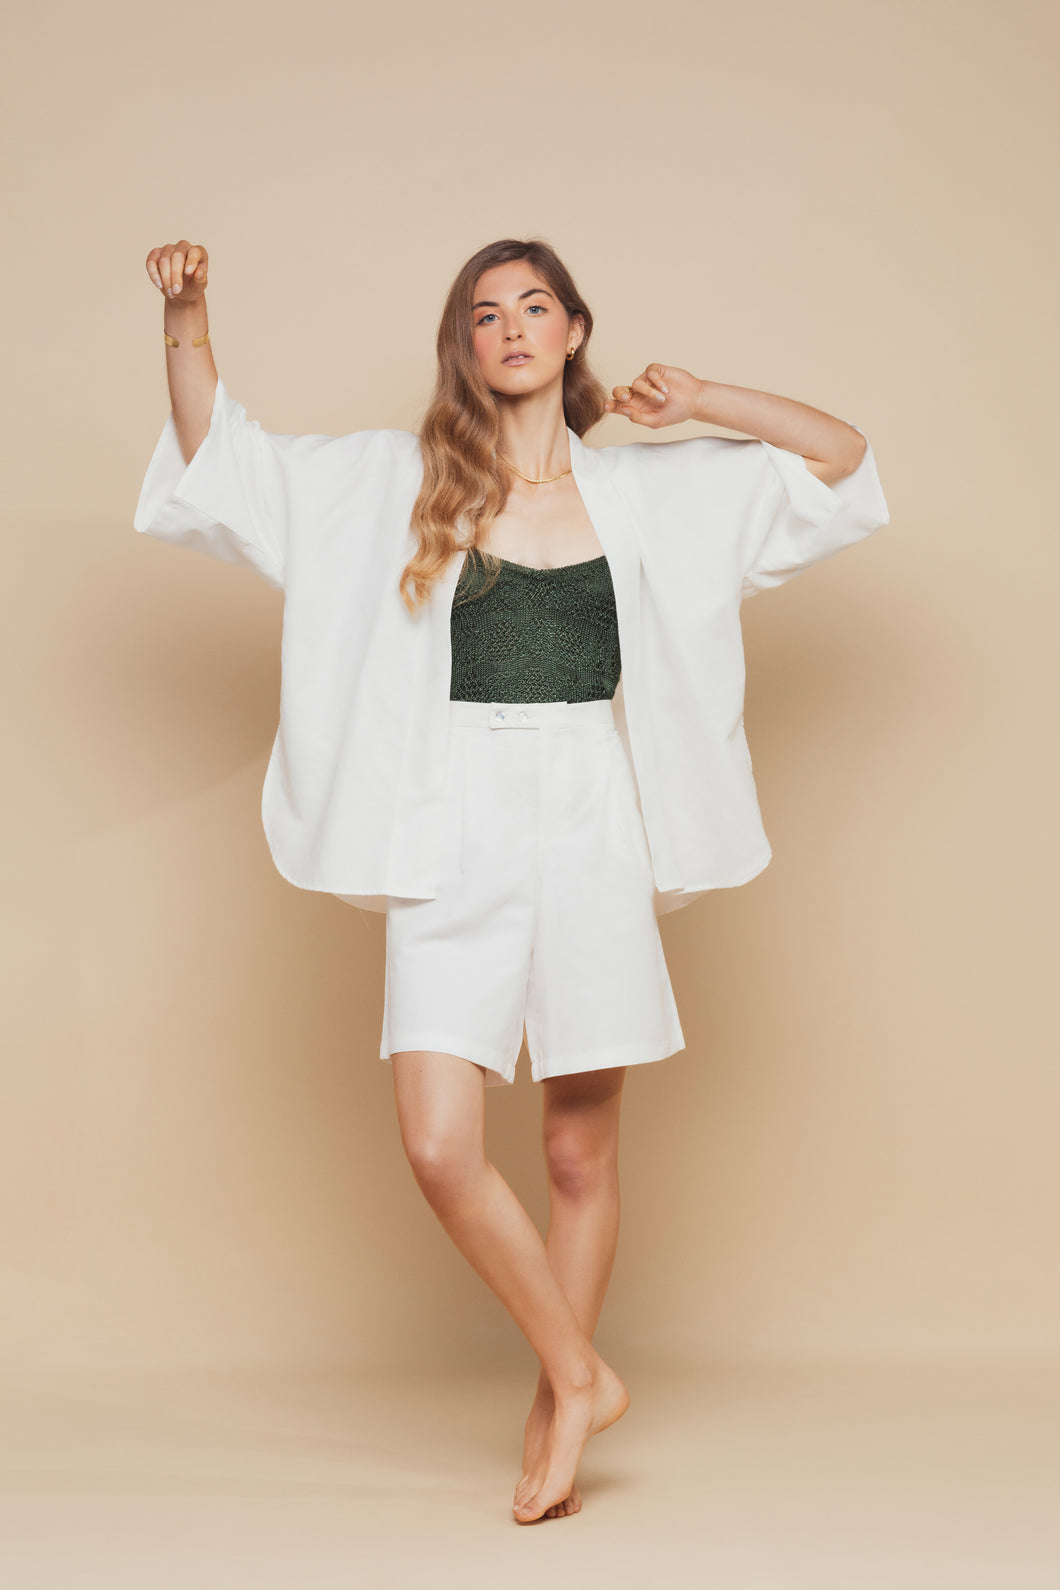 Kimono Curto Branco 55% Algodão + 45% Cânhamo